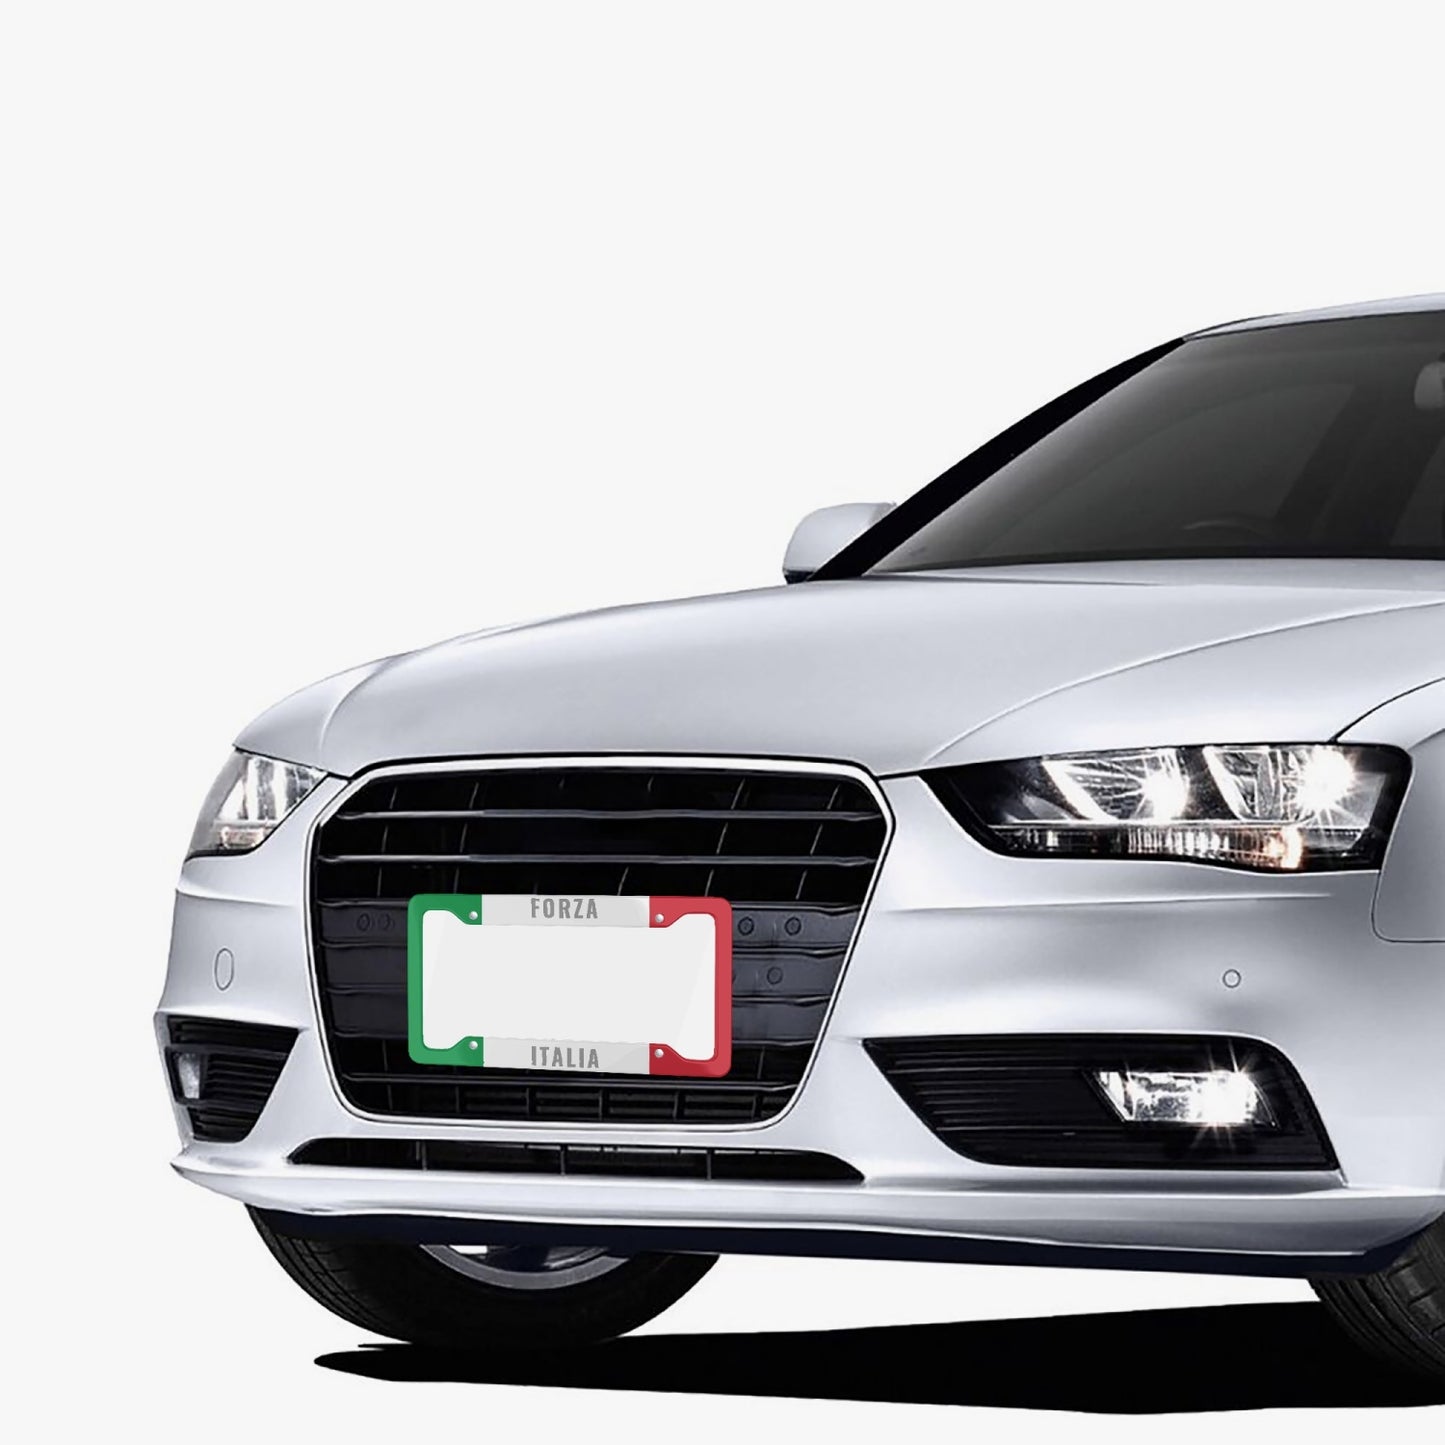 Forza Italia - License Plate Frame